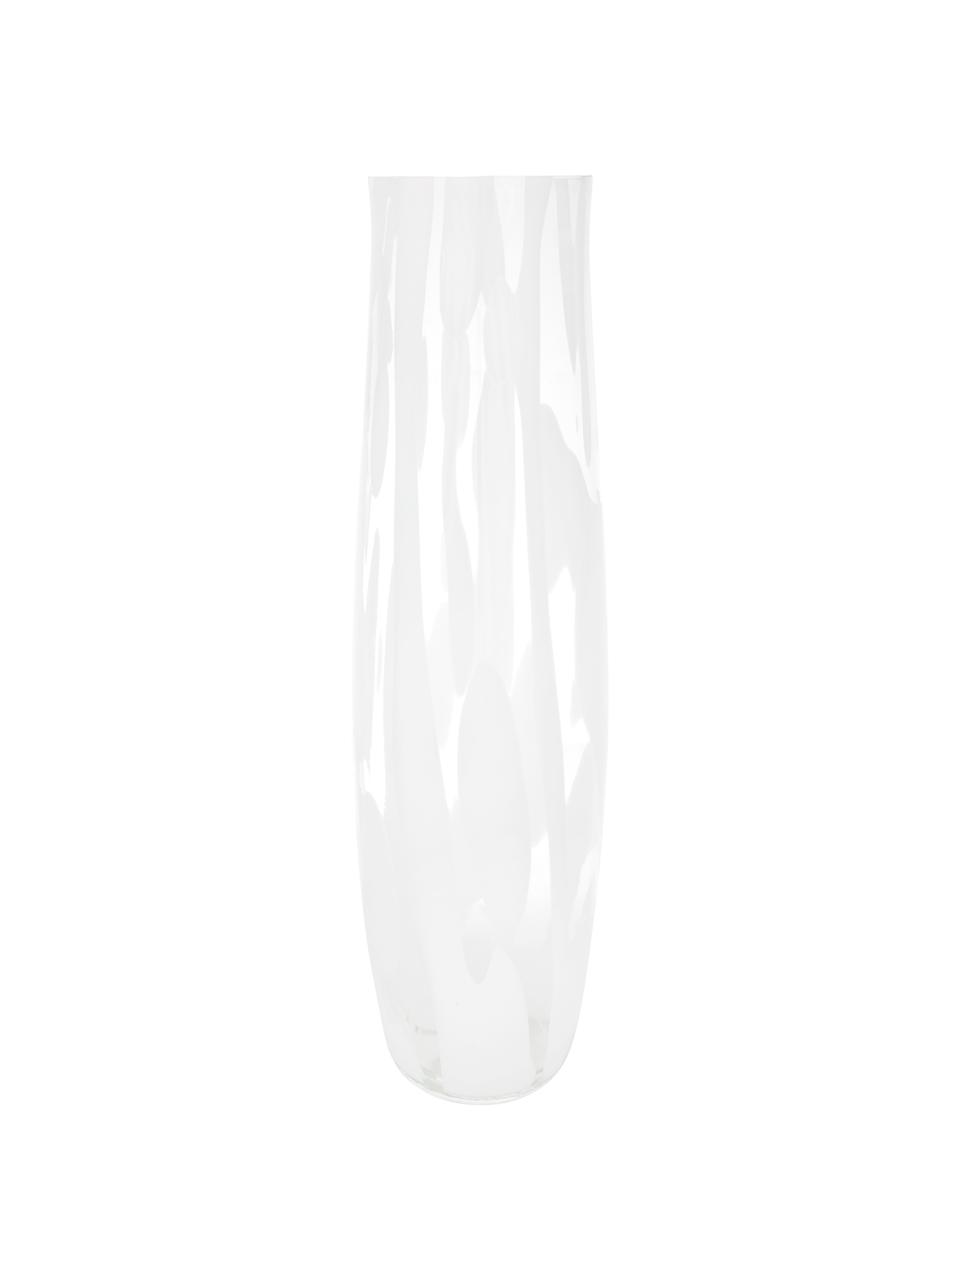 Jarrón de vidrio Decorate, Vidrio, Transparente, blanco, Ø 16 x Al 55 cm